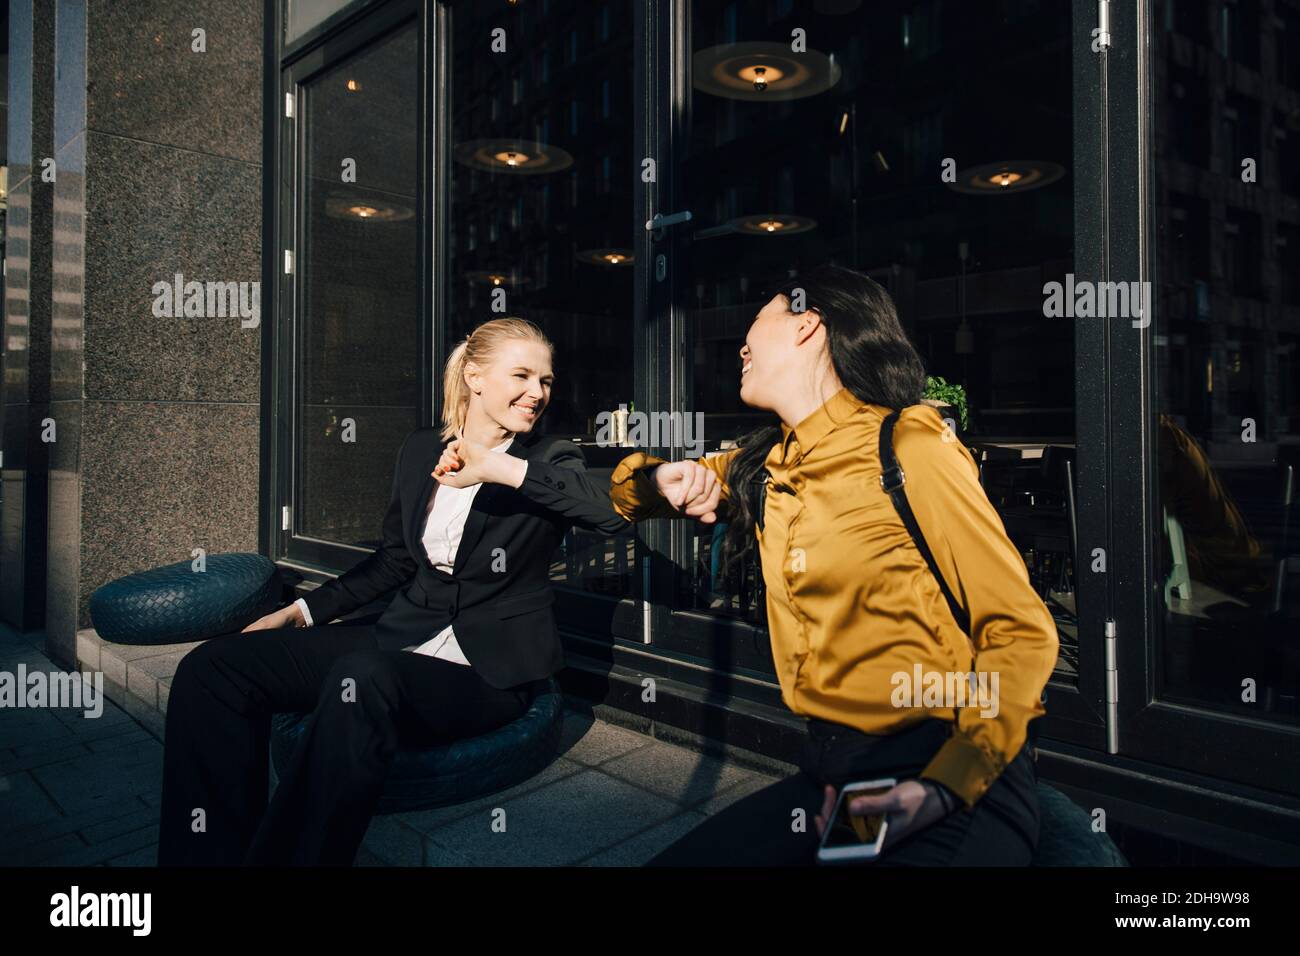 Women greeting using elbows Stock Photo